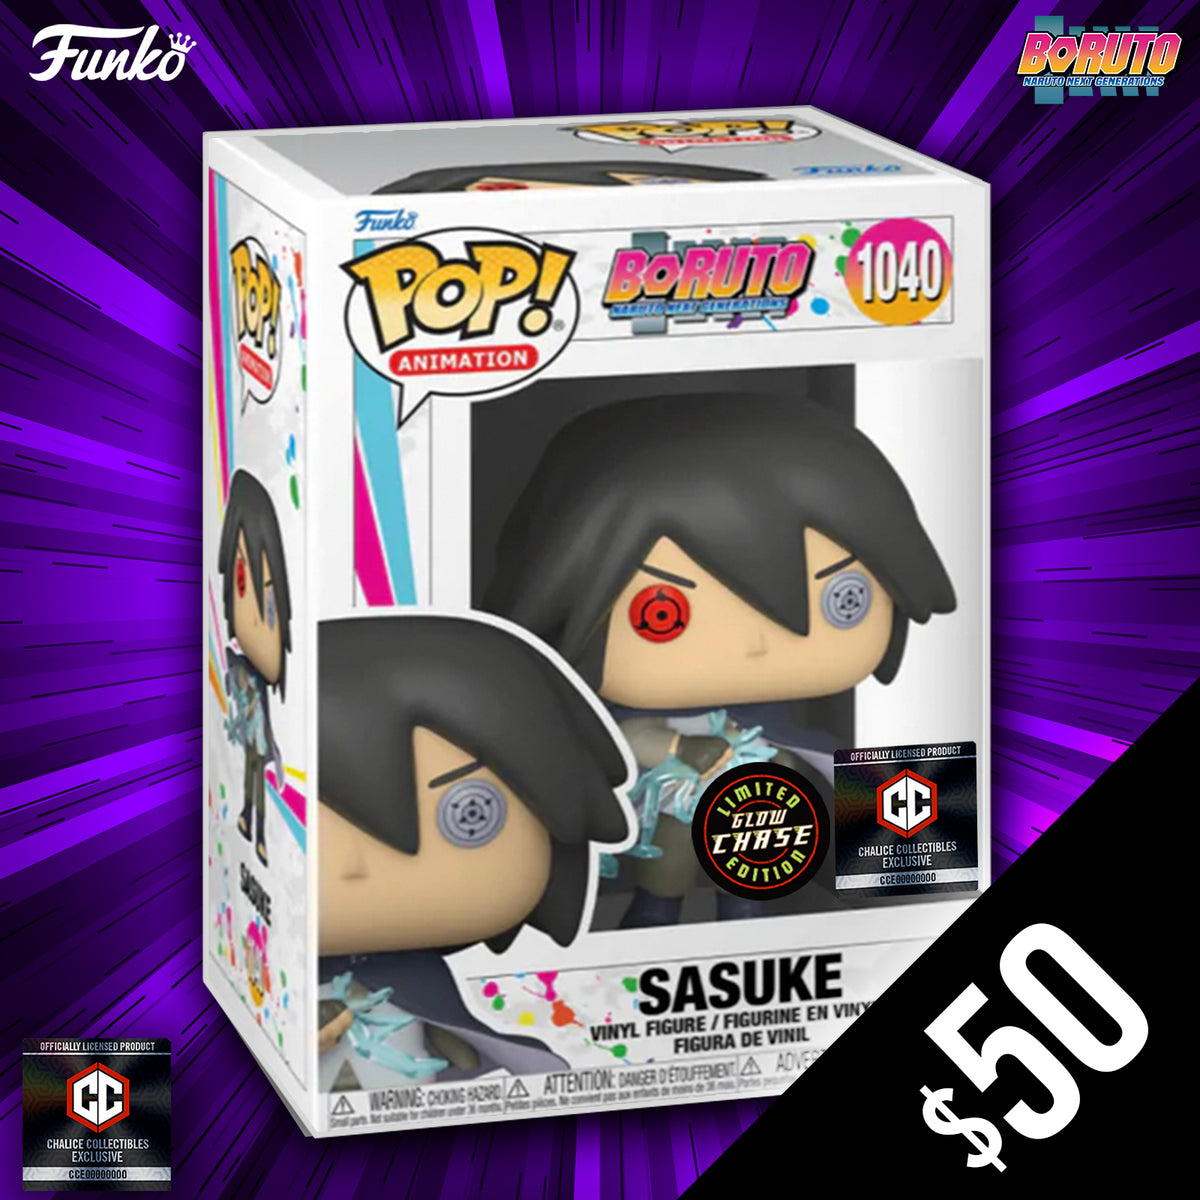 Pre-orer: Funko Pop! Chalice Collectibles Exclusive: Boruto: Sasuke #1